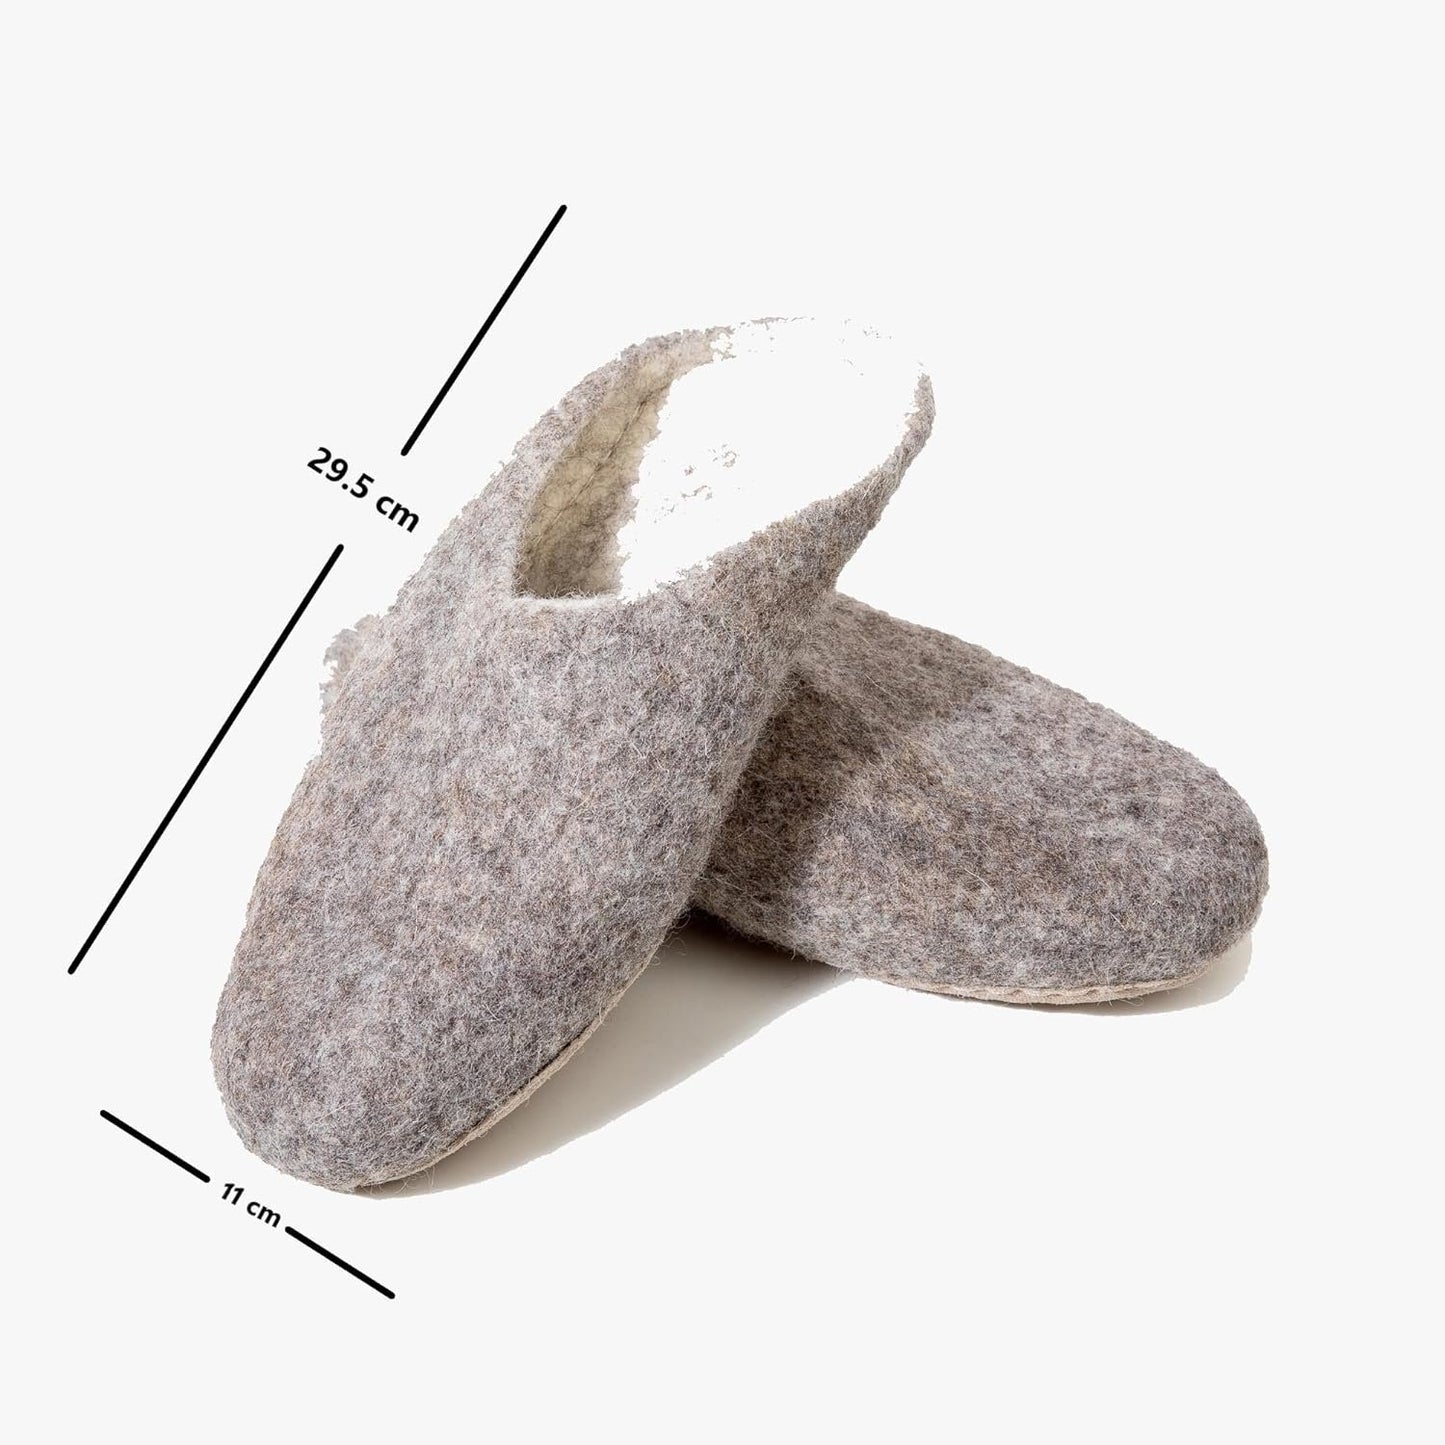 Woolygon Unisex Wool Clogs Indoor Slippers - Mules Sandals for Men Women, Warm Slip-On Soft Comfy Sheepskin Loafers Lightweight Footwear